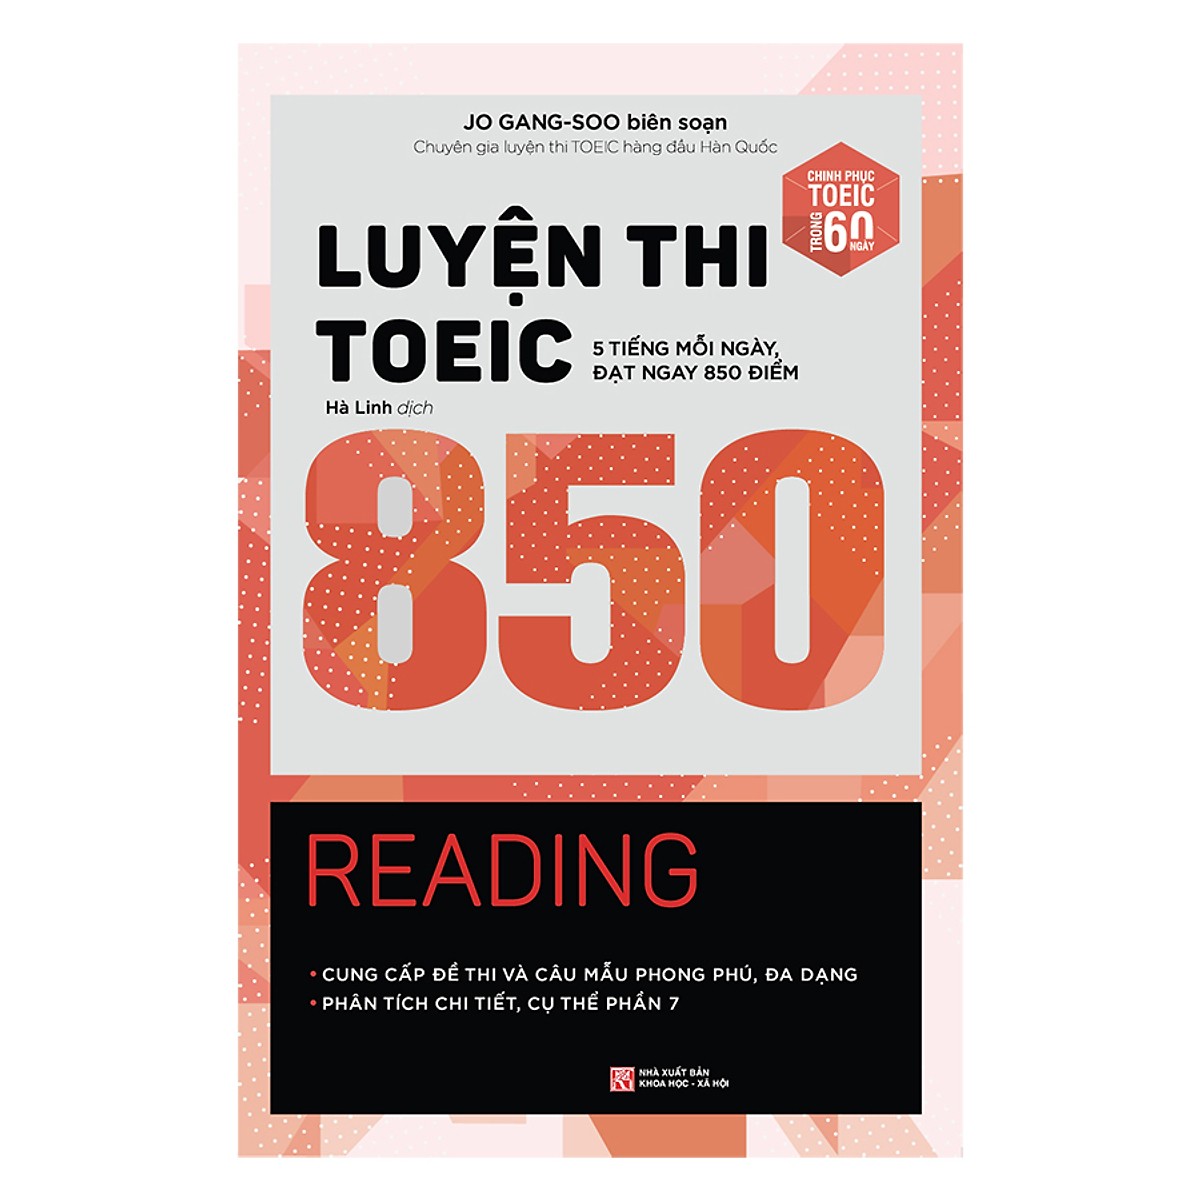 Luyện thi TOEIC 850 - Reading (Tặng kèm TickBook)